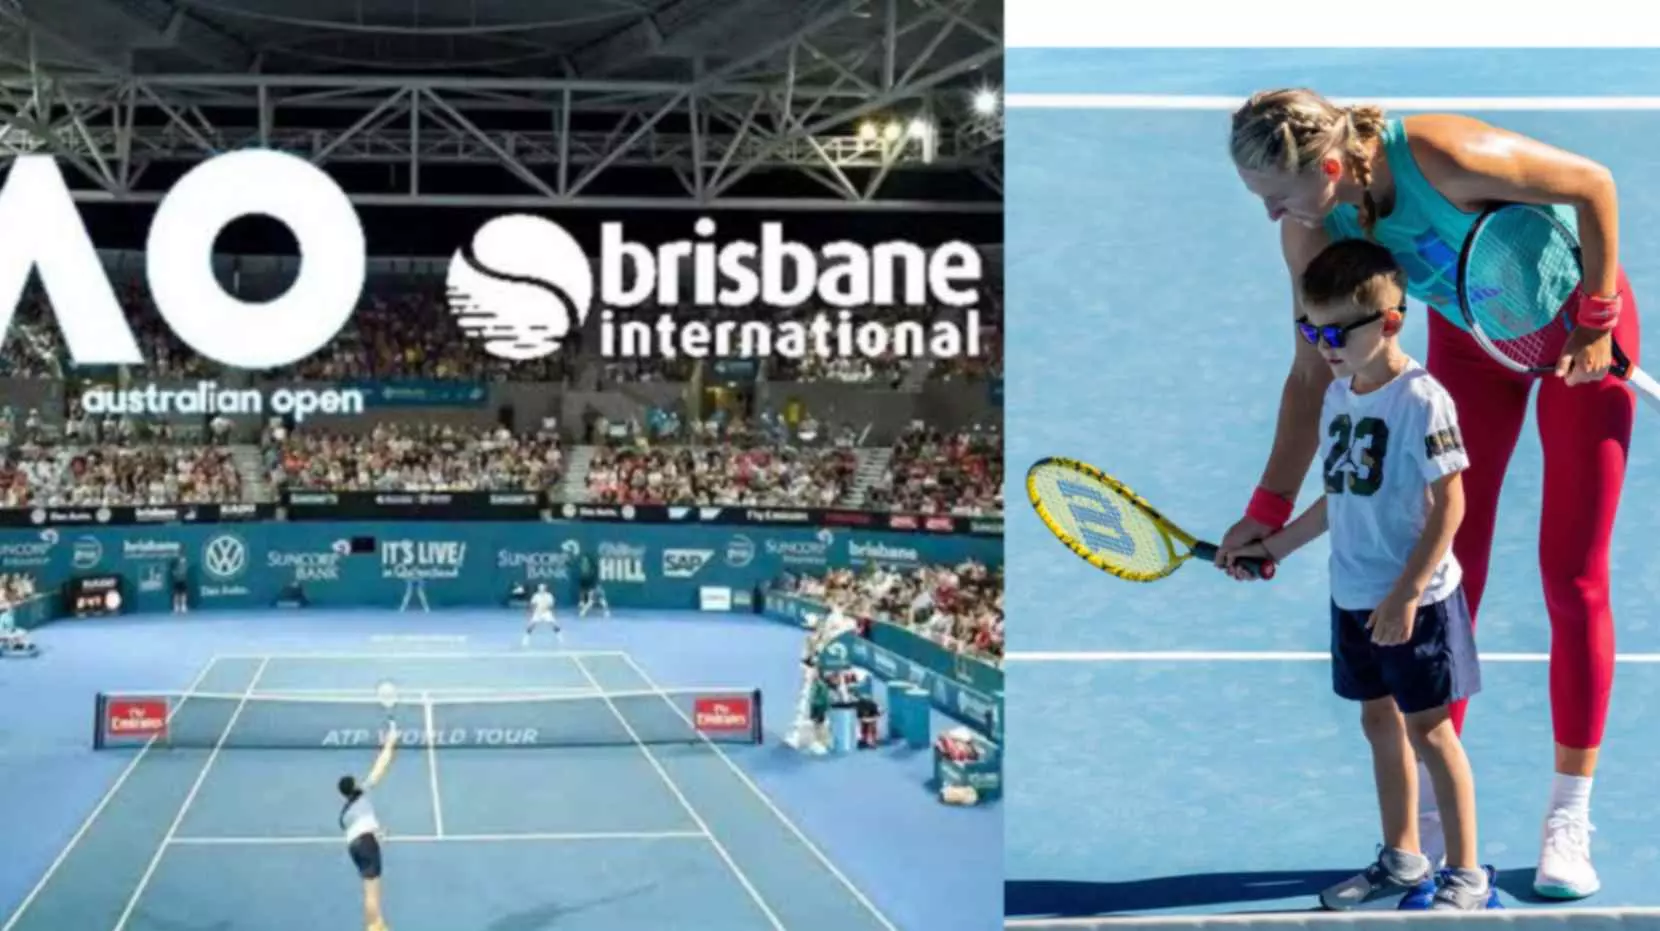 Brisbane International